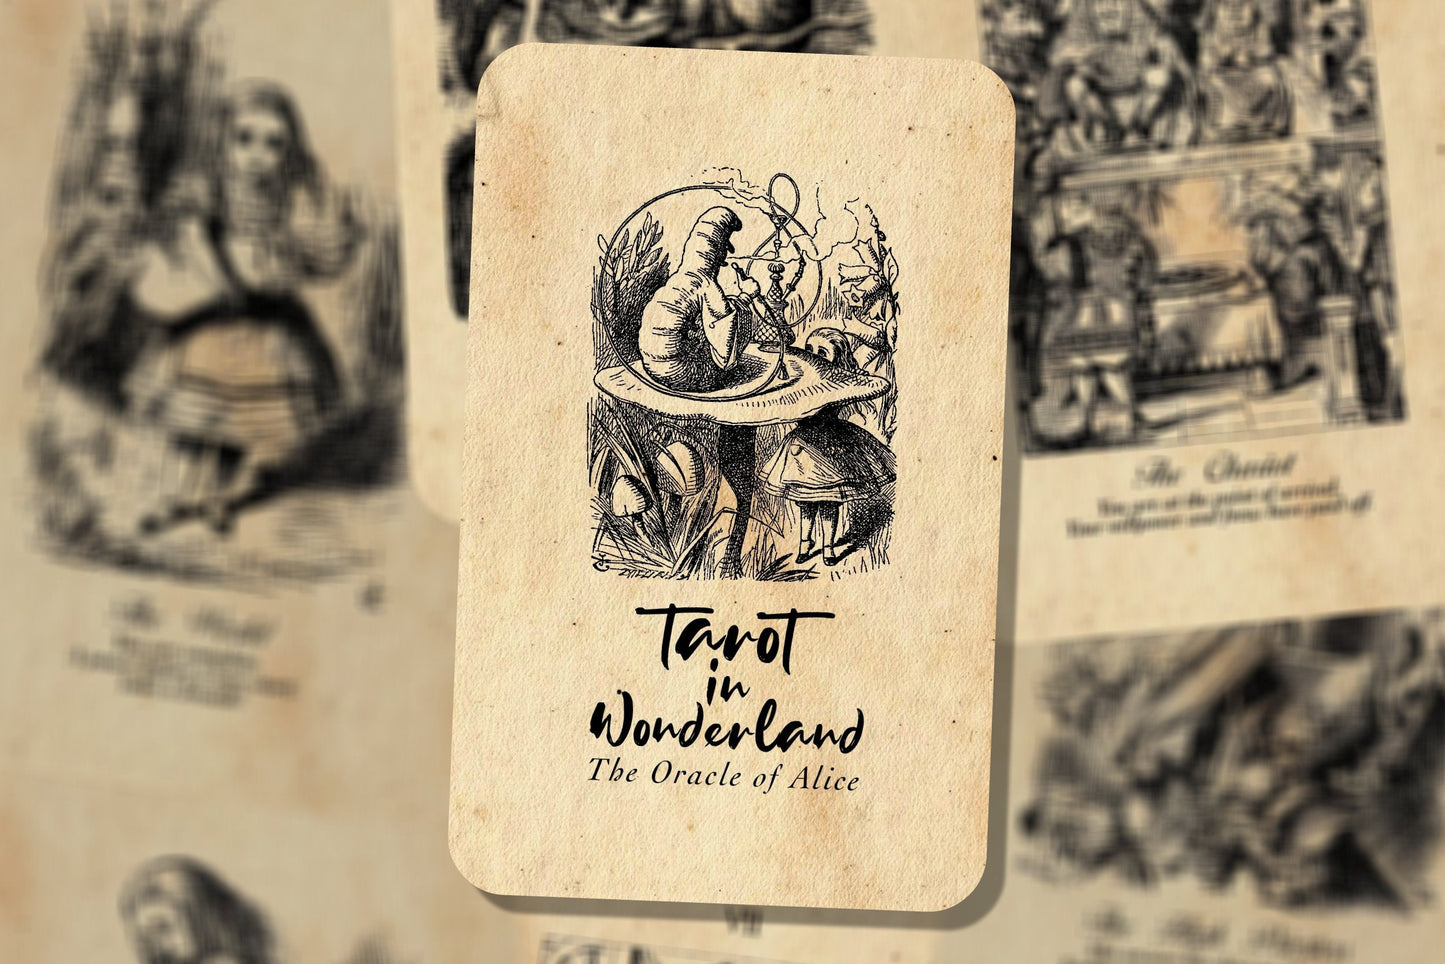 Tarot in wonderland - Major Arcana